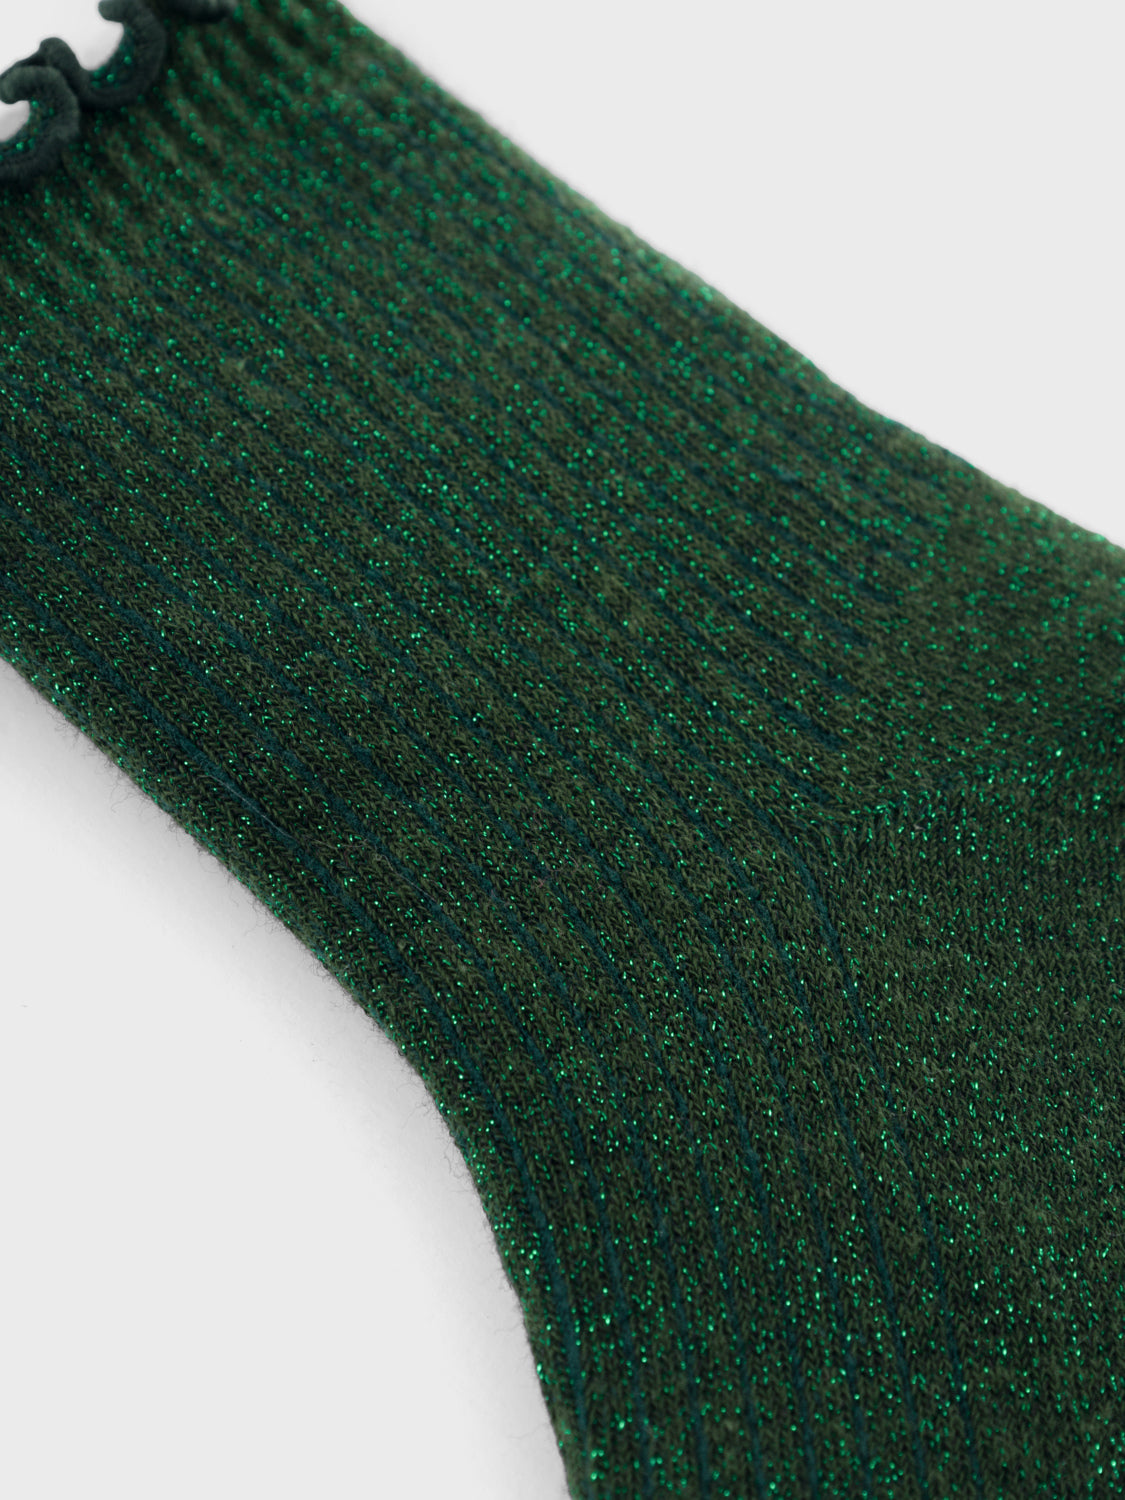 NKFNANNI Socks - Rifle Green